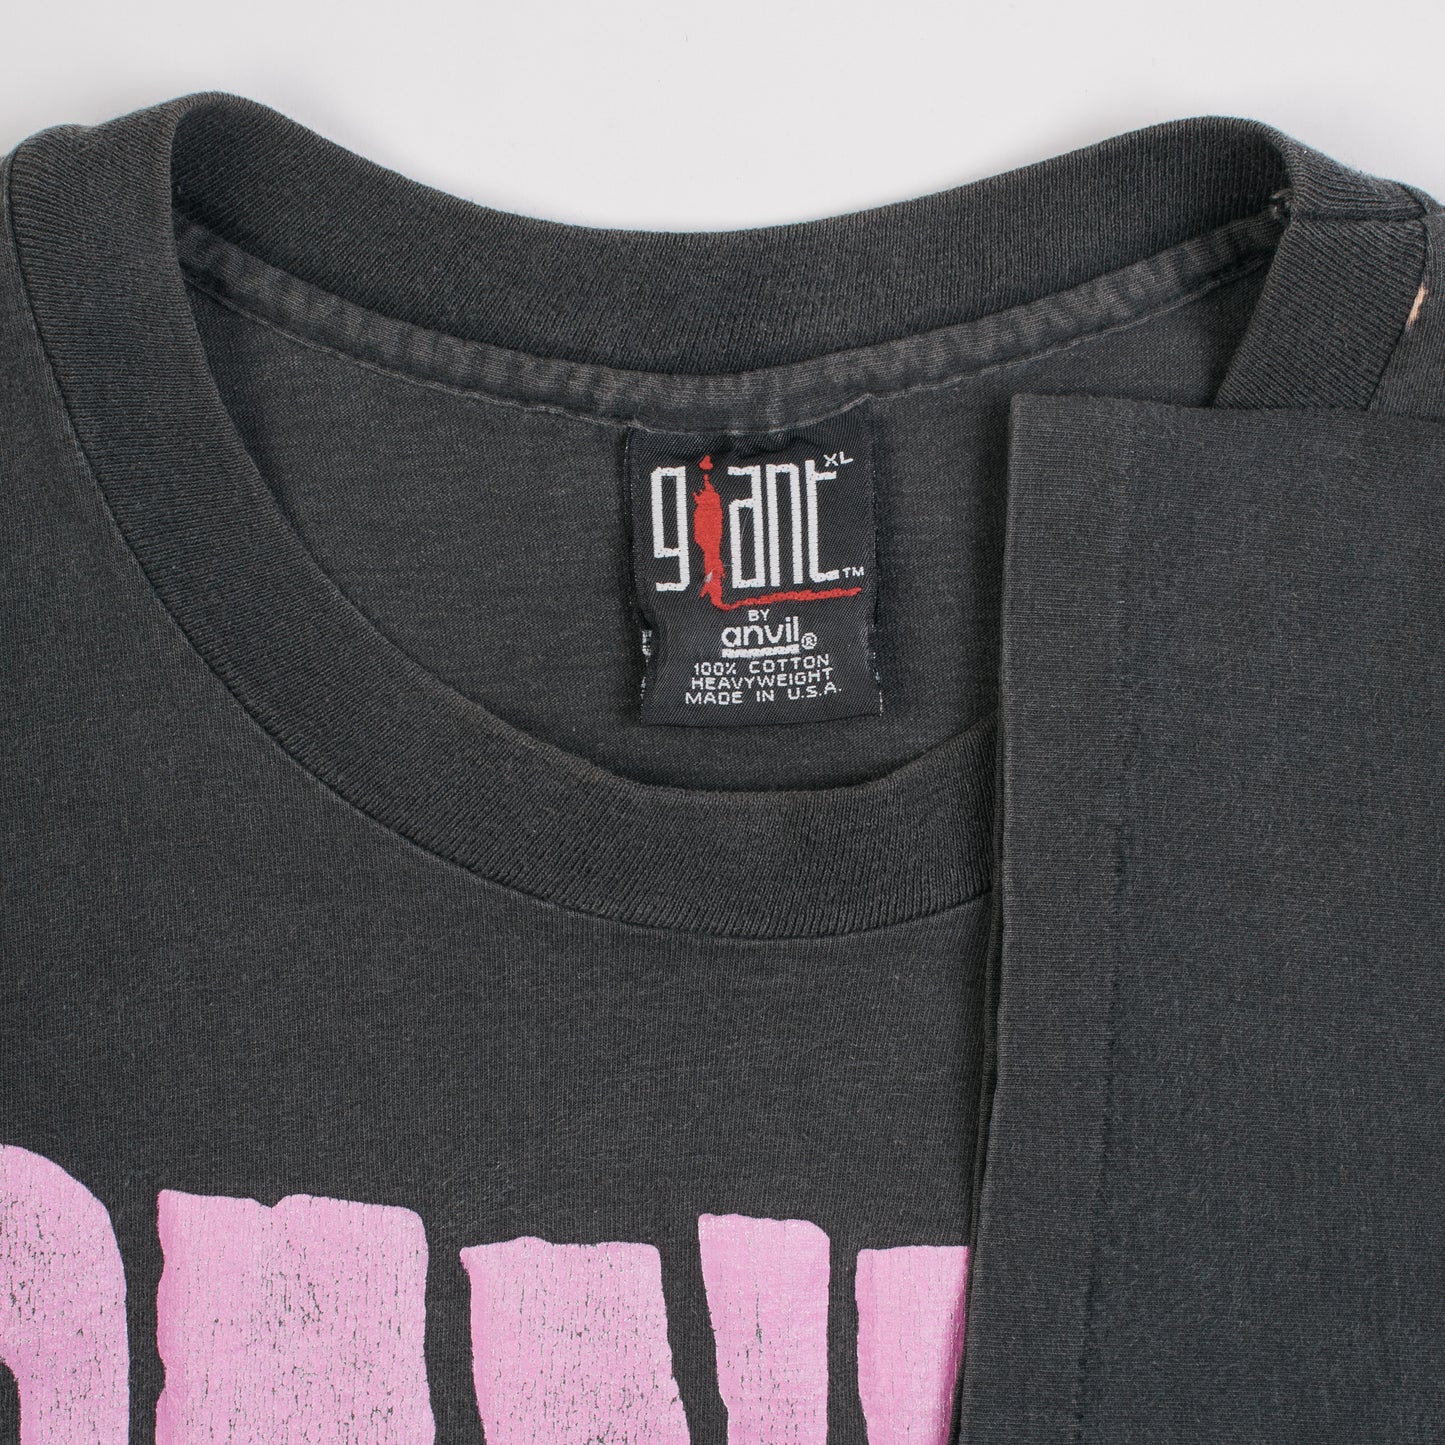 Vintage 1992 Danzig How The Gods Kill Tour T-Shirt – Mills Vintage USA